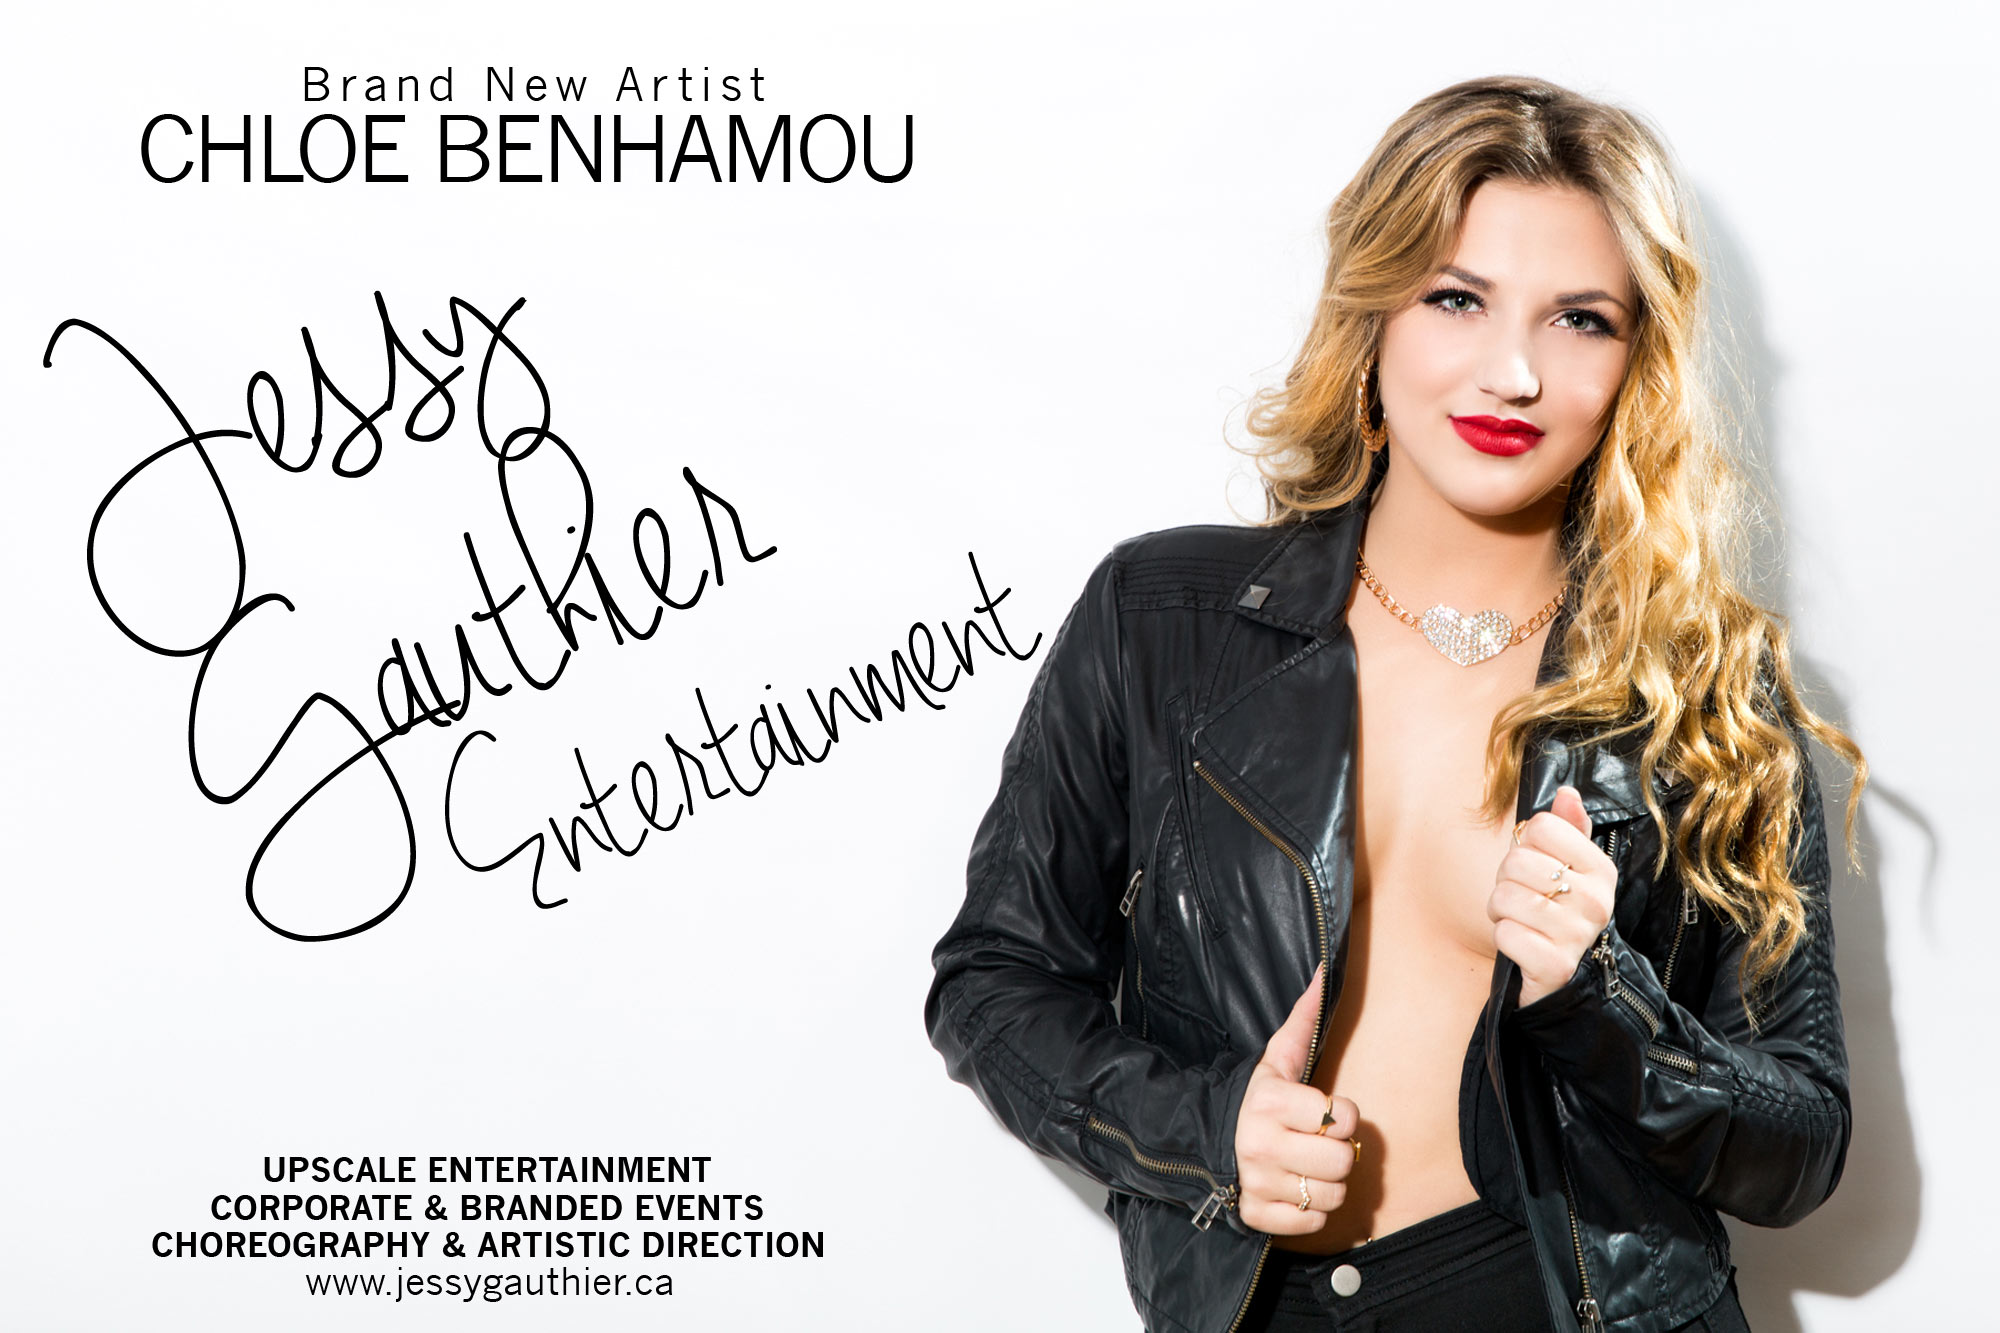 Jessy Gauthier Entertainment - Chloe Benhamou